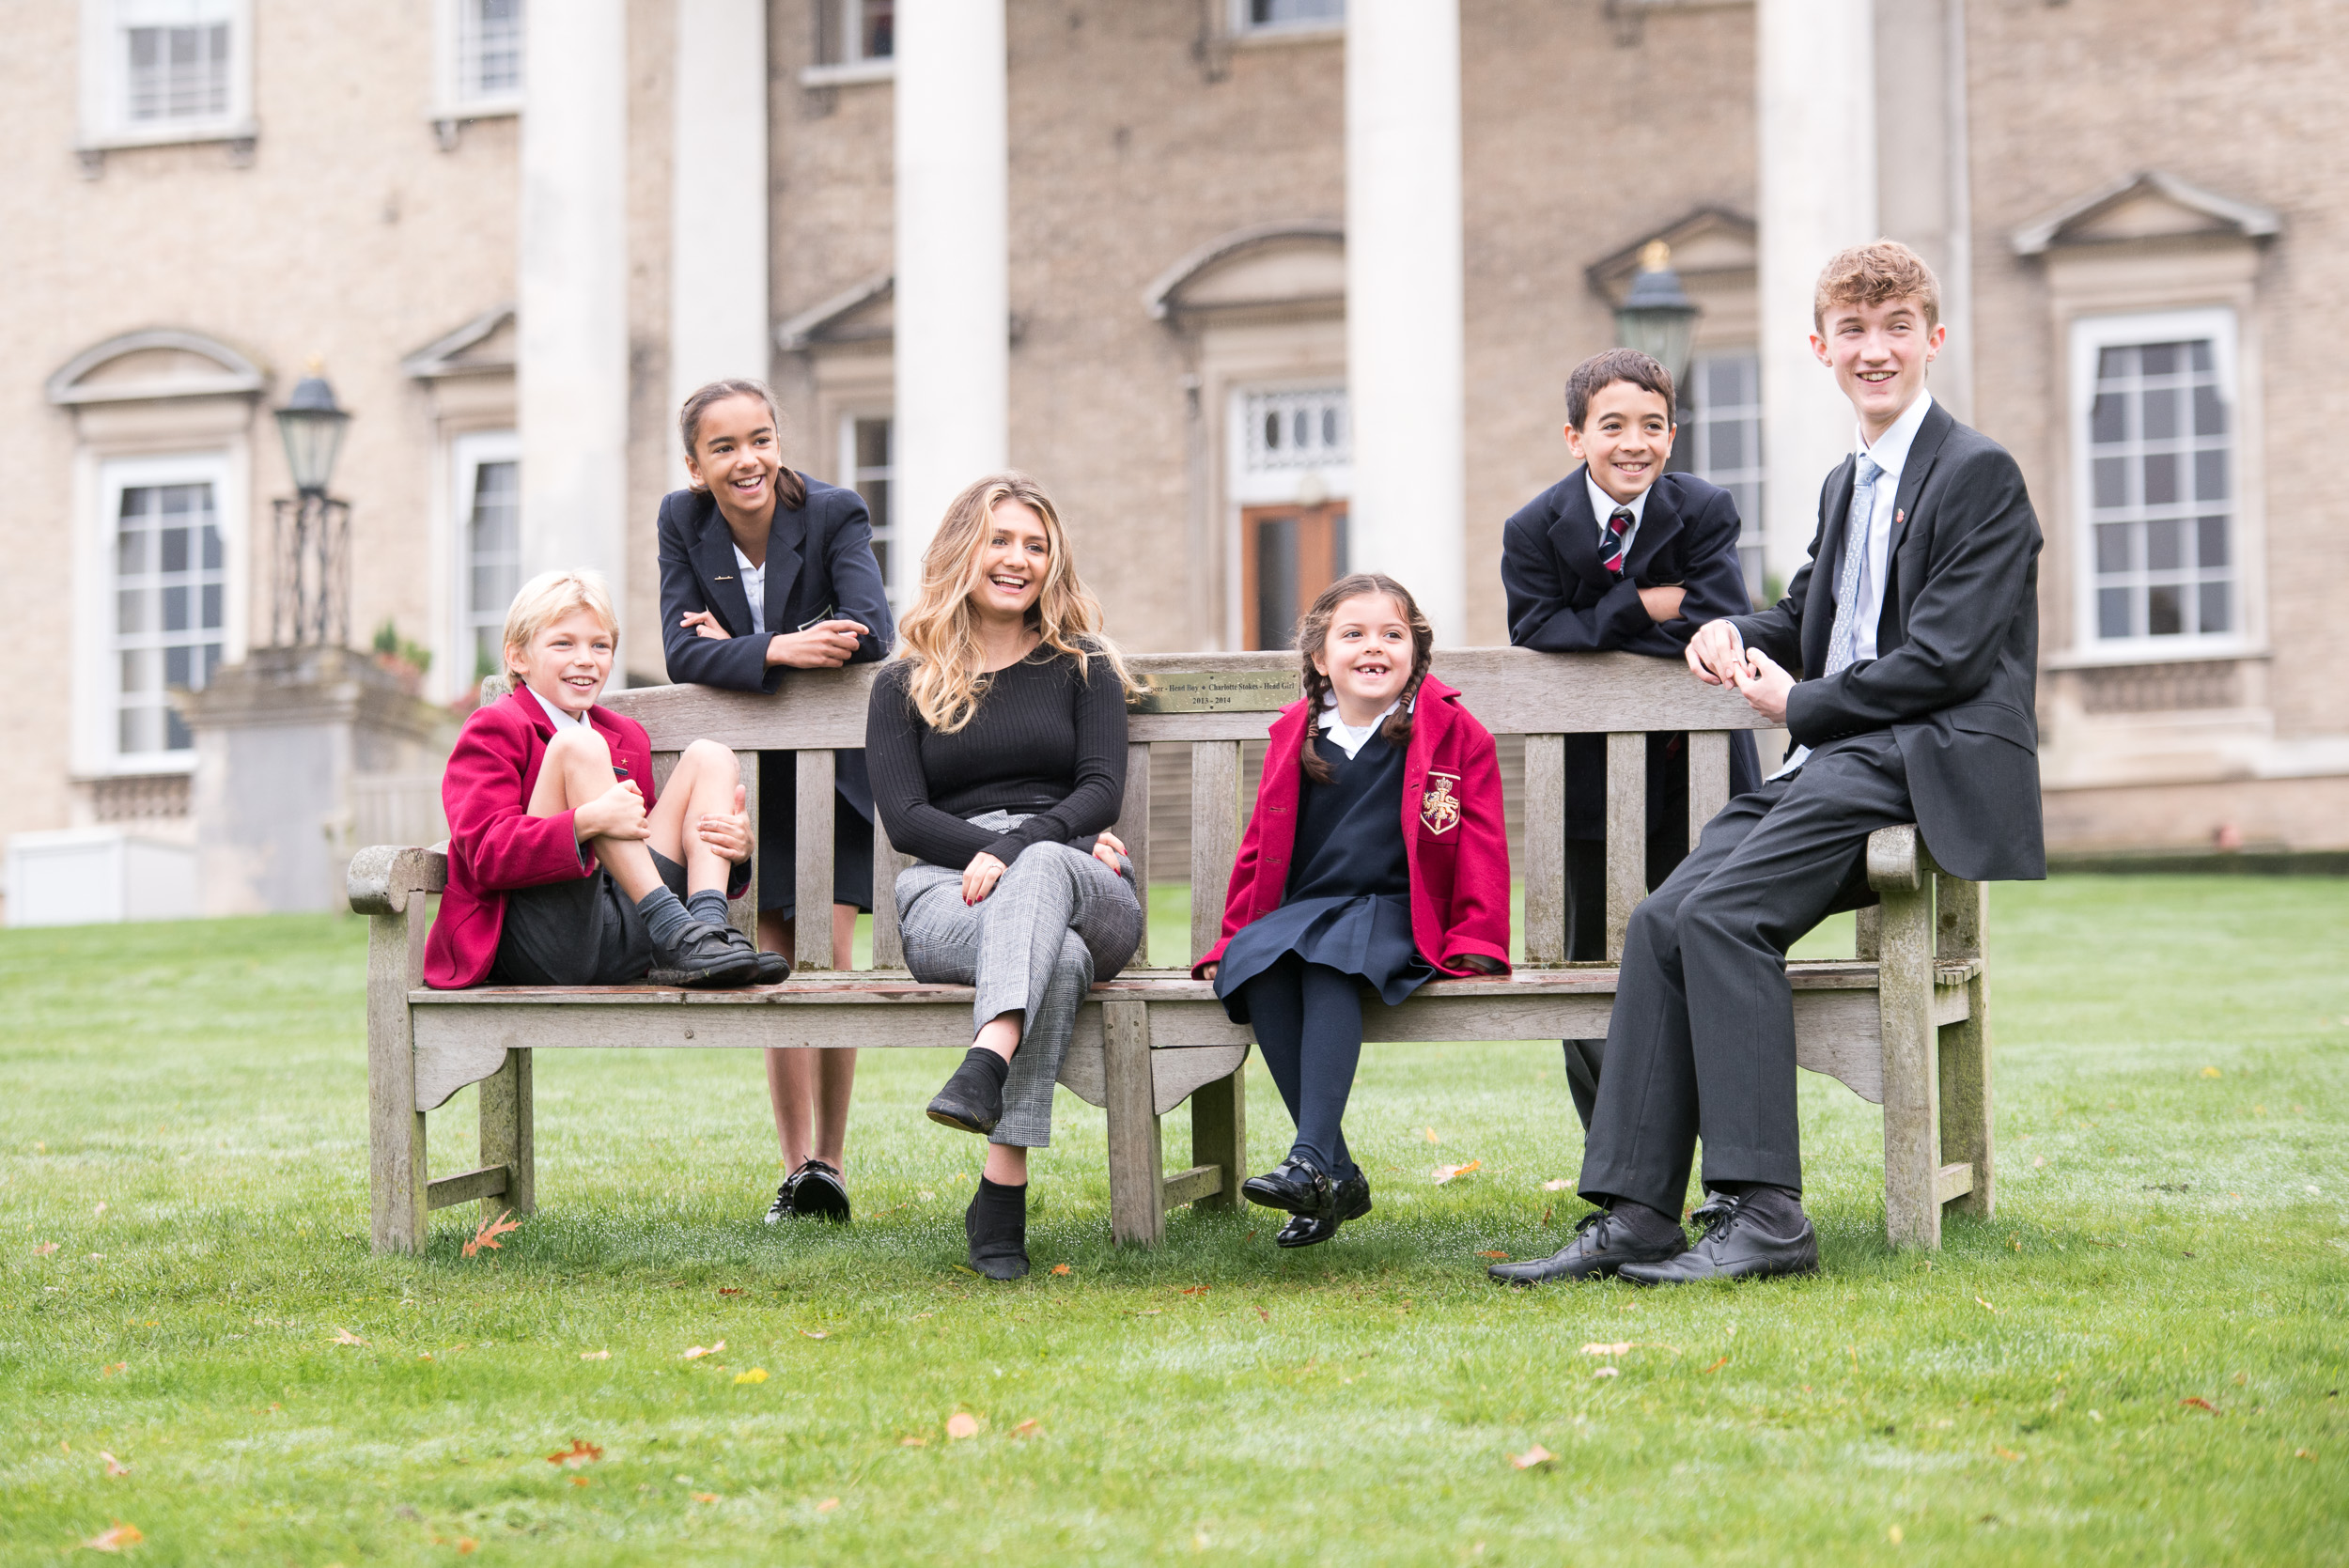 Pupils pose on school bench outside mansion